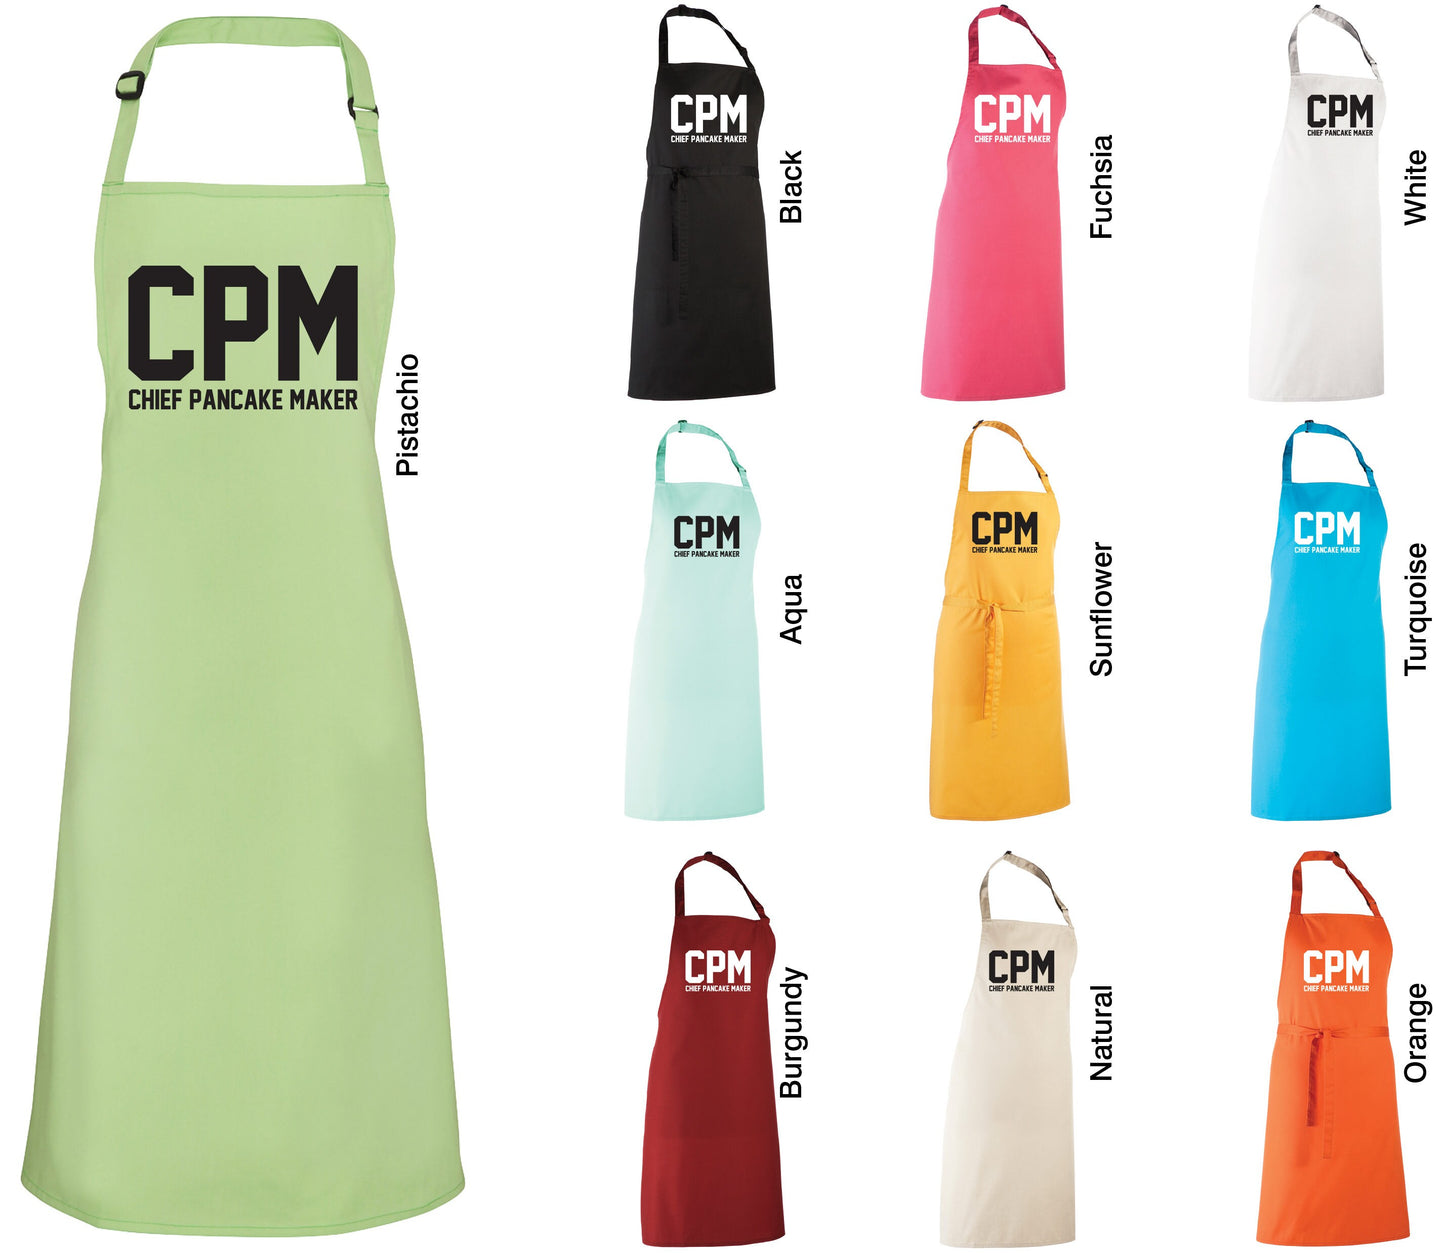 CPM Chief Pancake Maker Apron